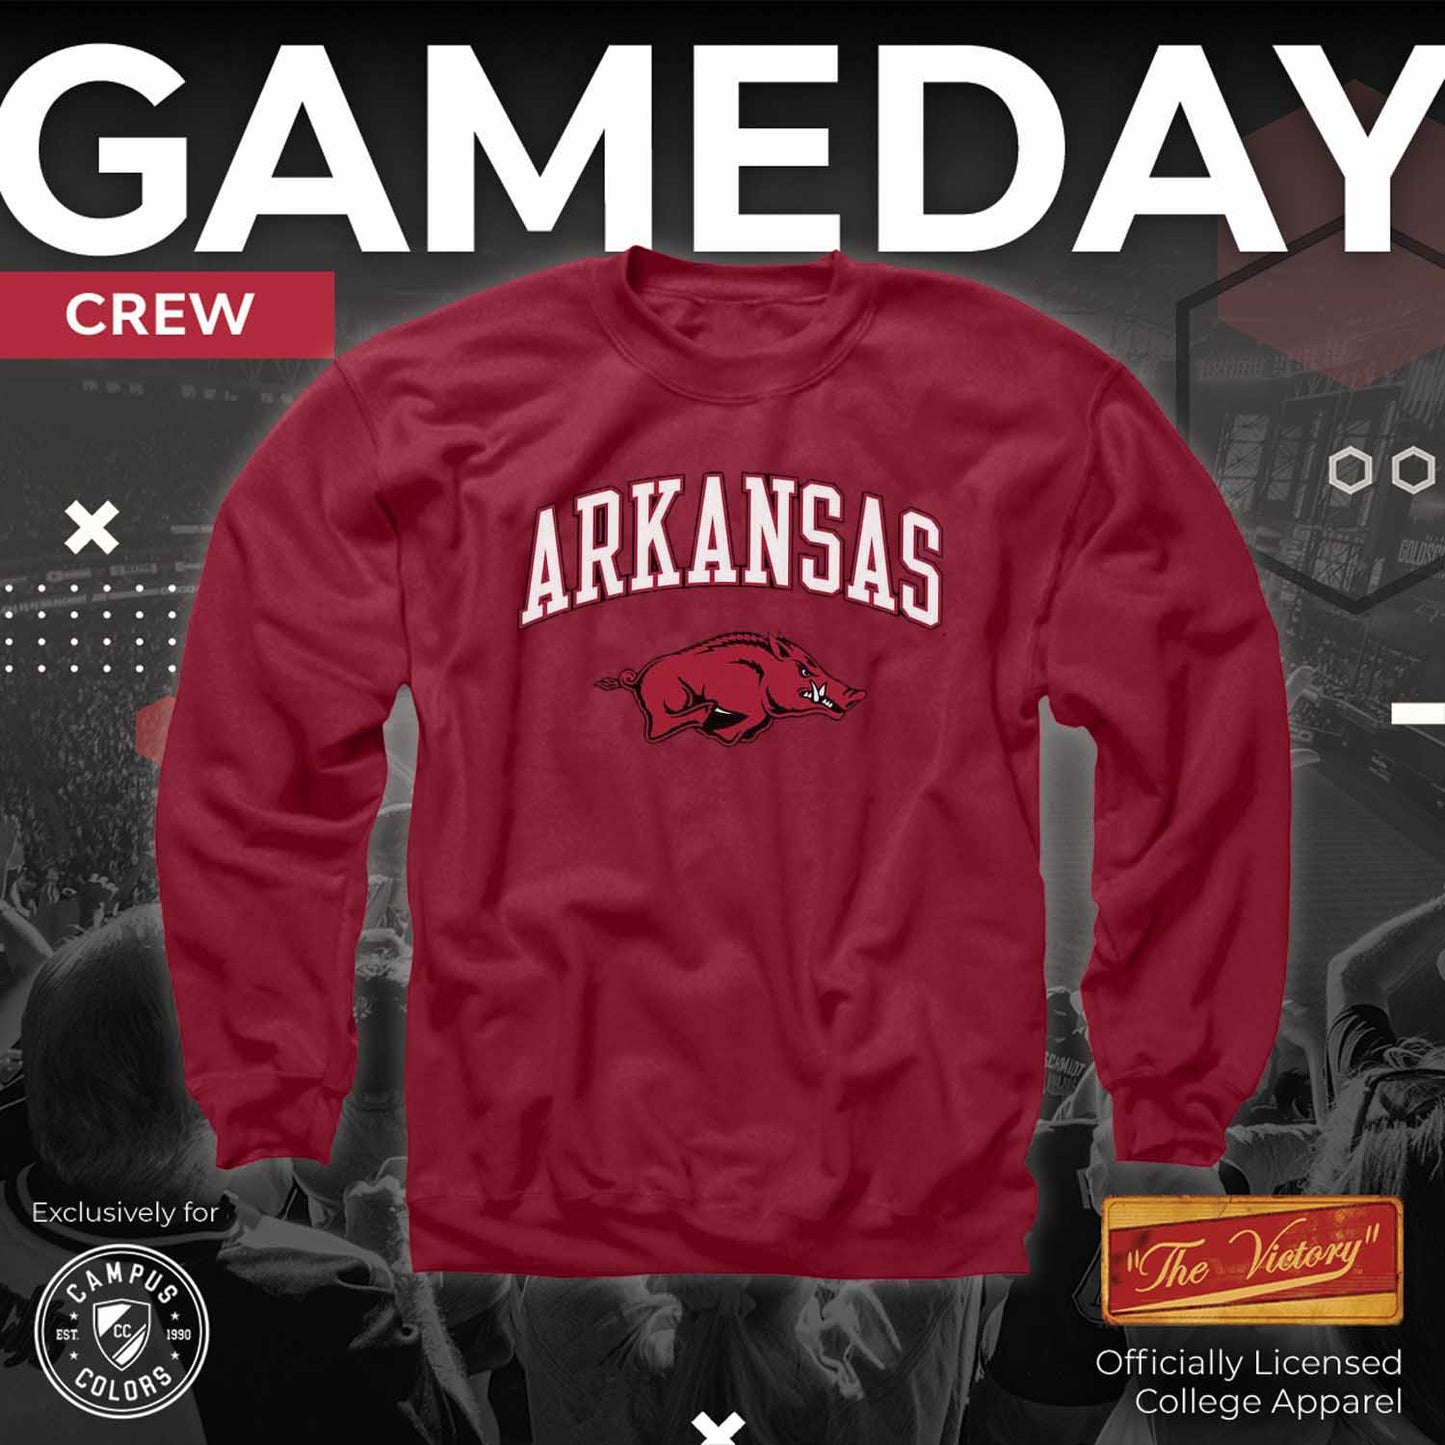 Arkansas Razorbacks Adult Arch & Logo Soft Style Gameday Crewneck Sweatshirt - Cardinal